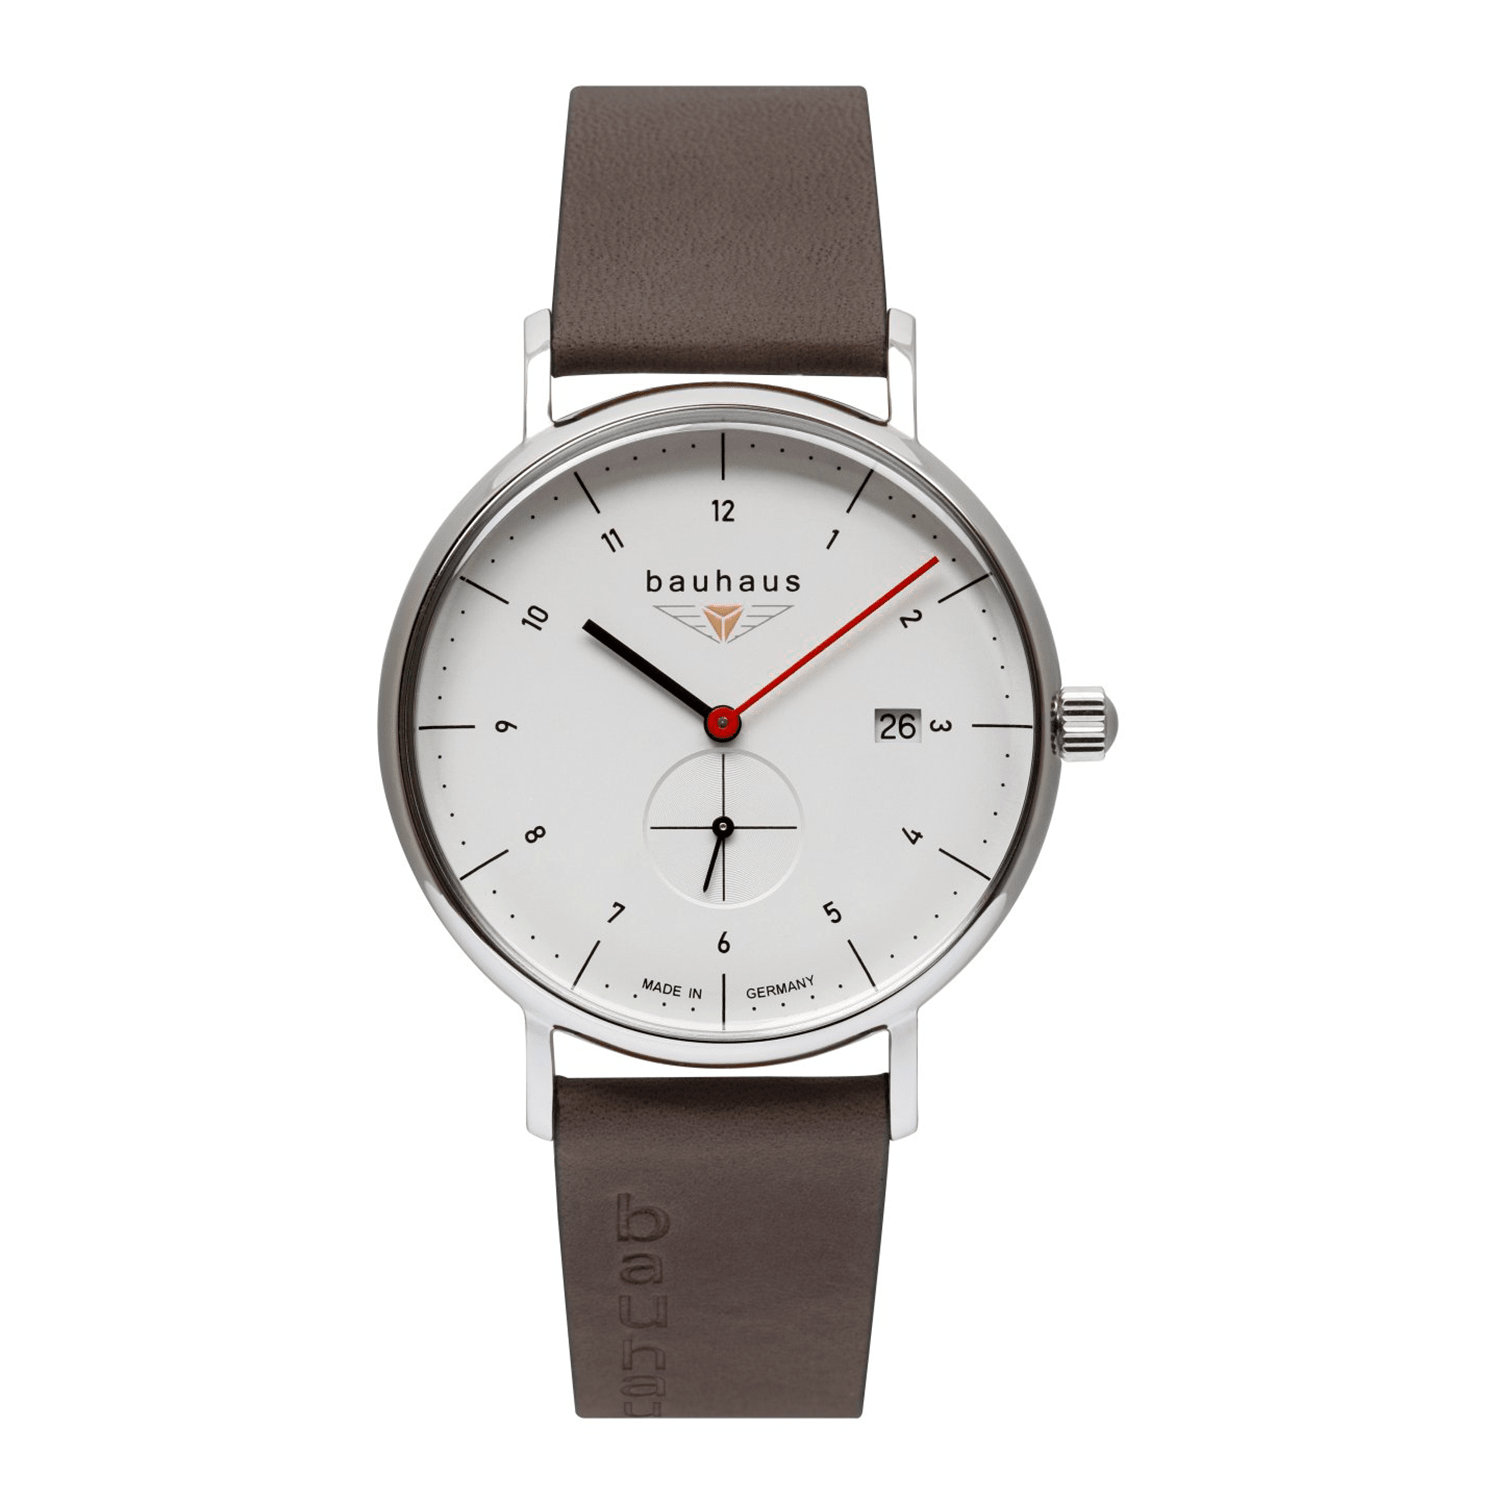 Bauhaus history 21301. the Watch Bauhaus Discover how influenced design